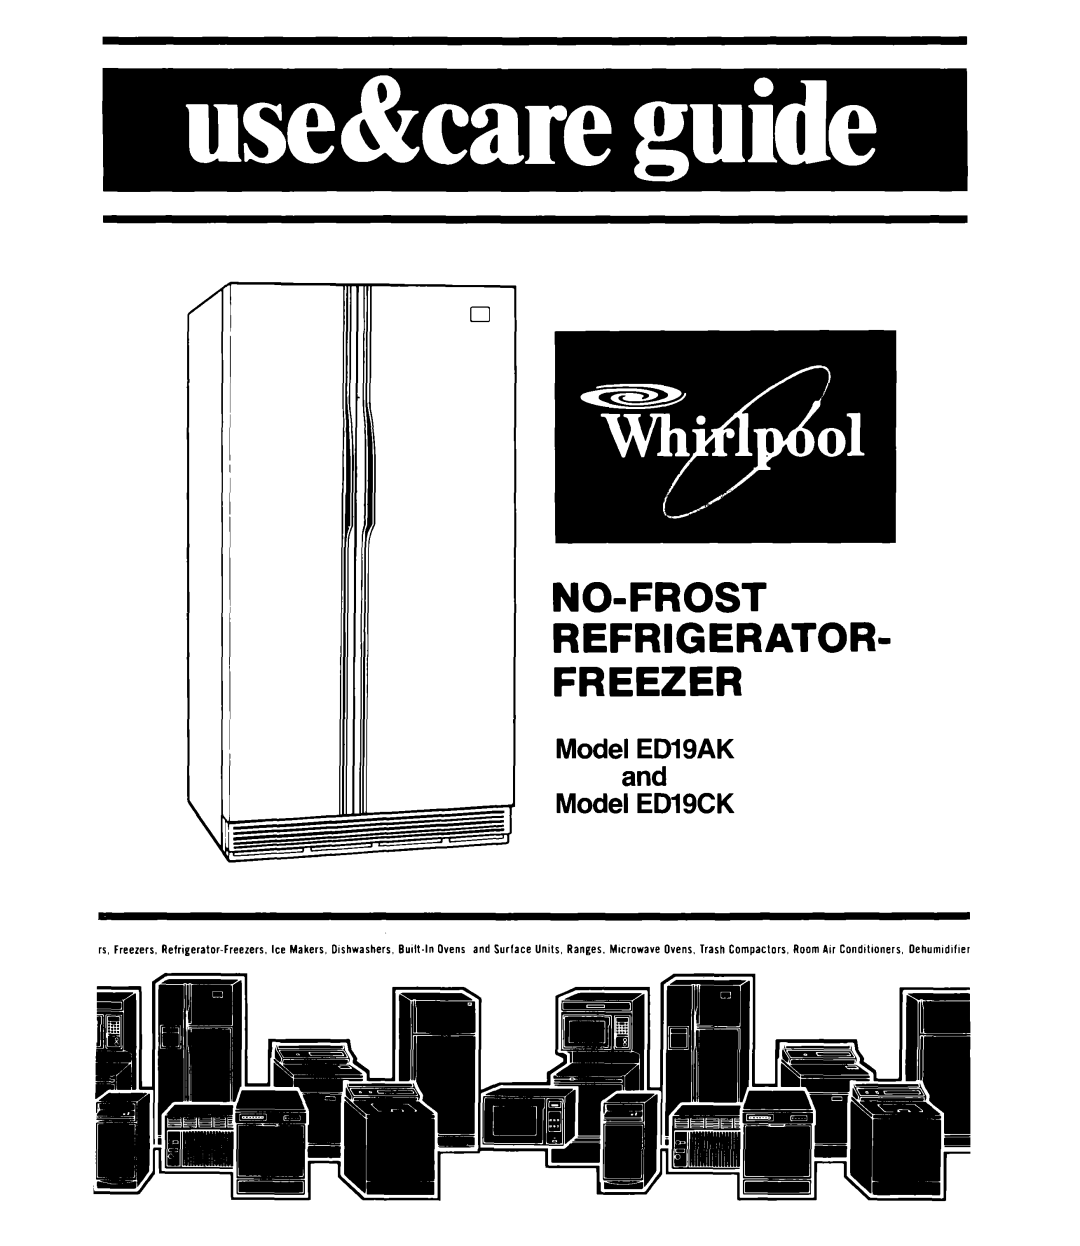 Whirlpool ED19CK manual No-Frost Refrigerator Freezer, Model, Edisak, Edisck 